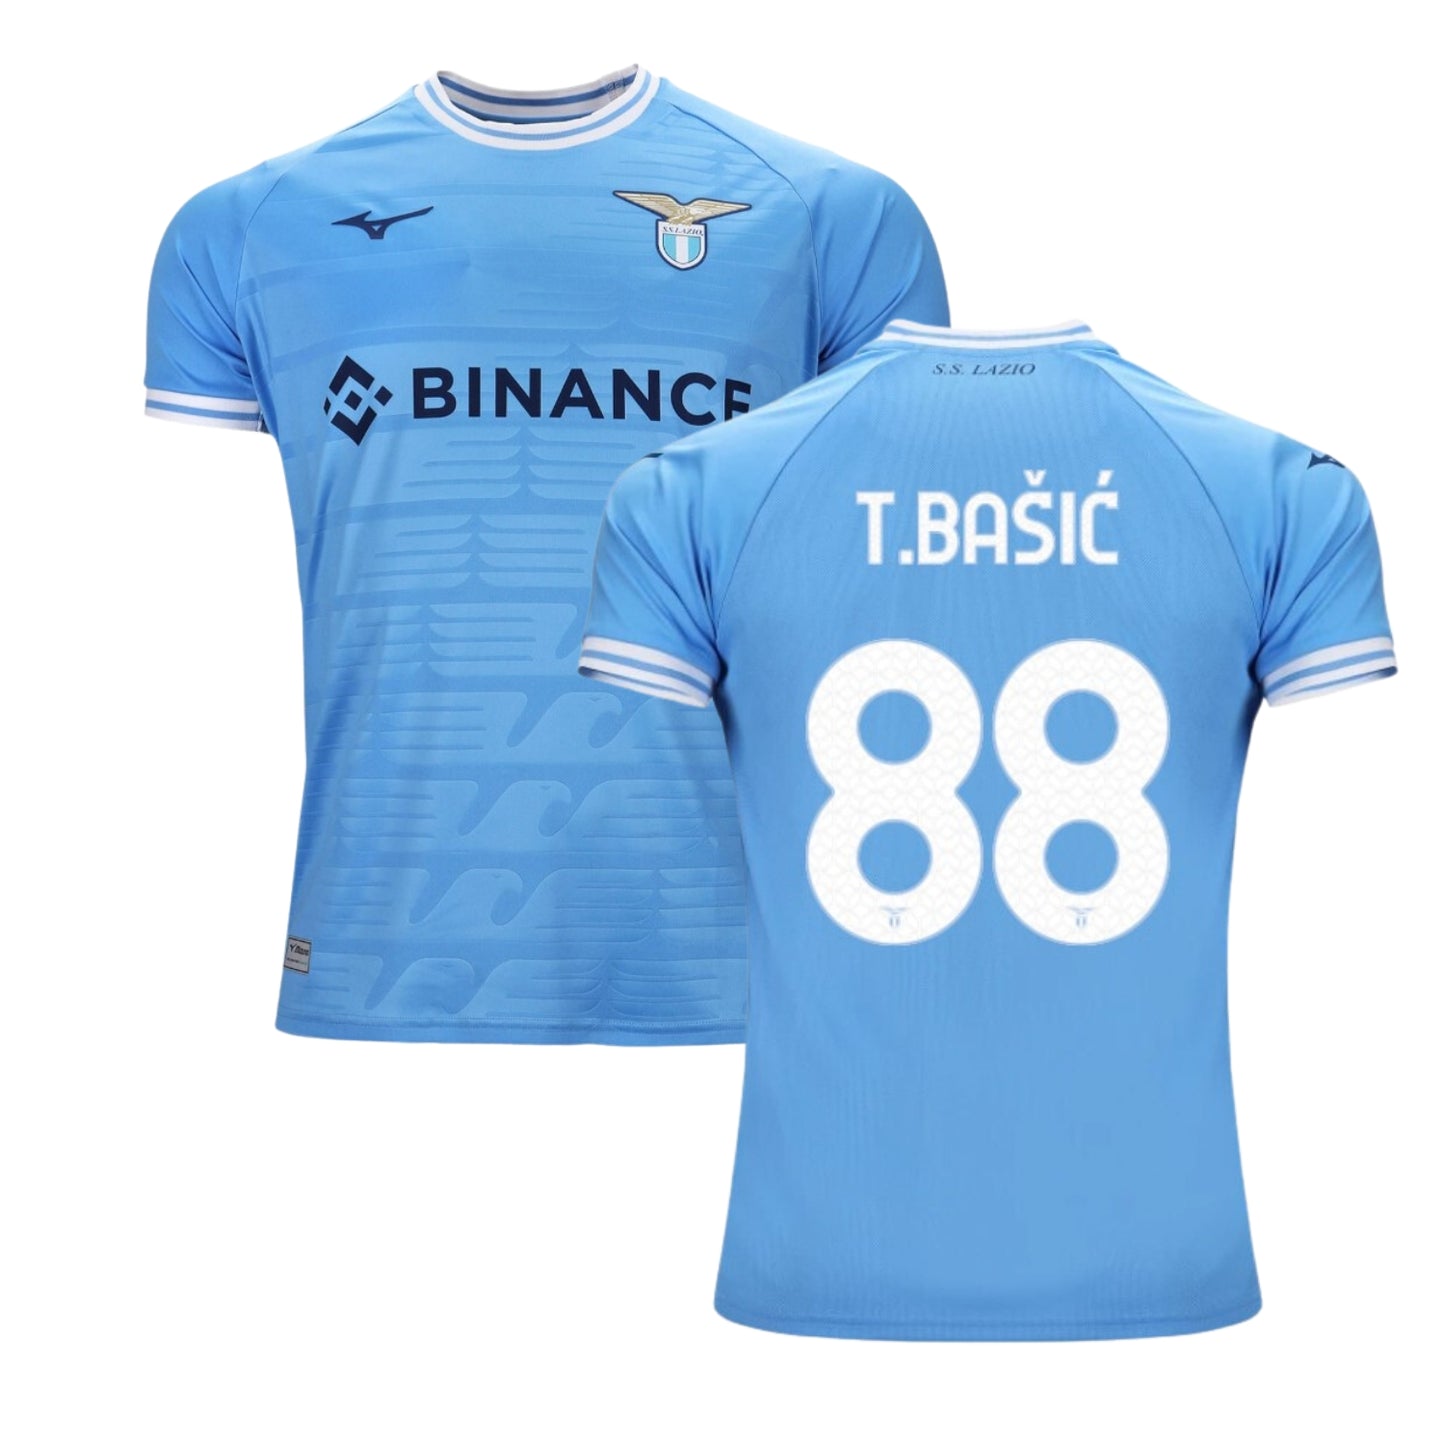 Toma Bašić Napoli 88 Jersey